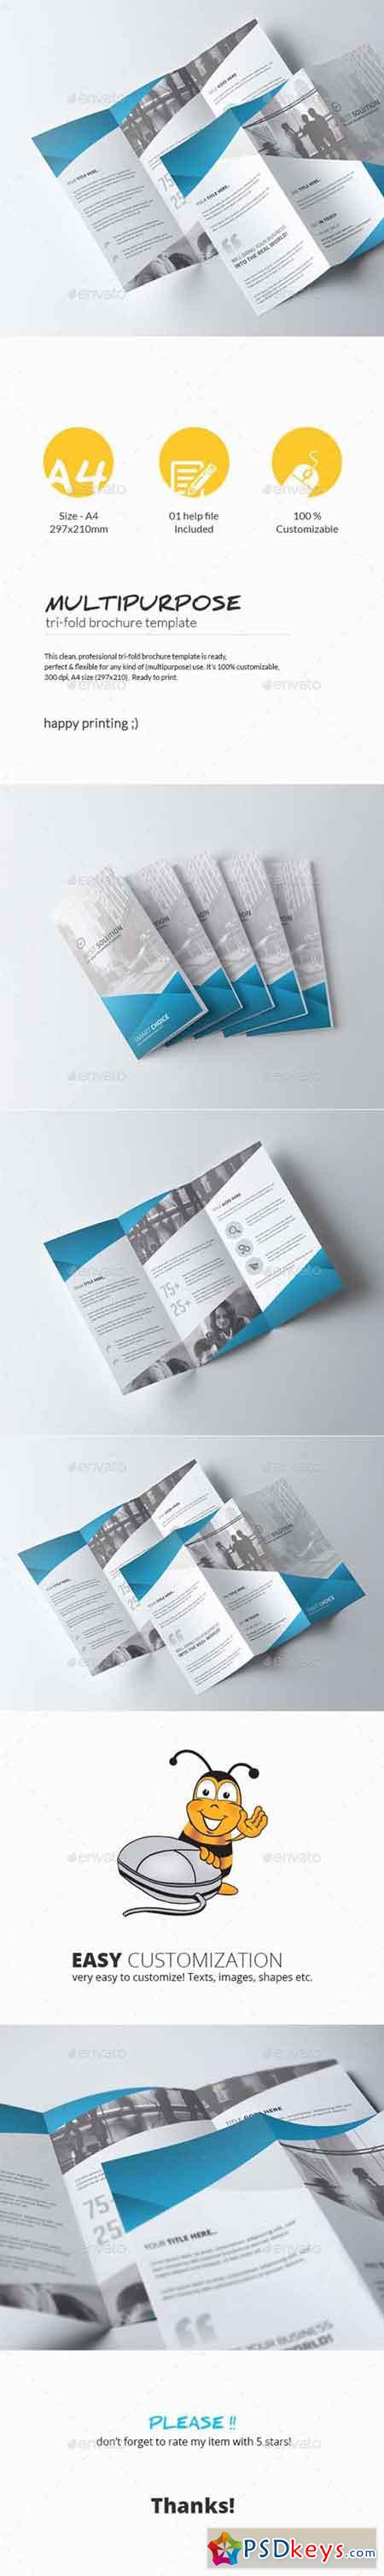 Tri-Fold Brochure - Multipurpose 11242629